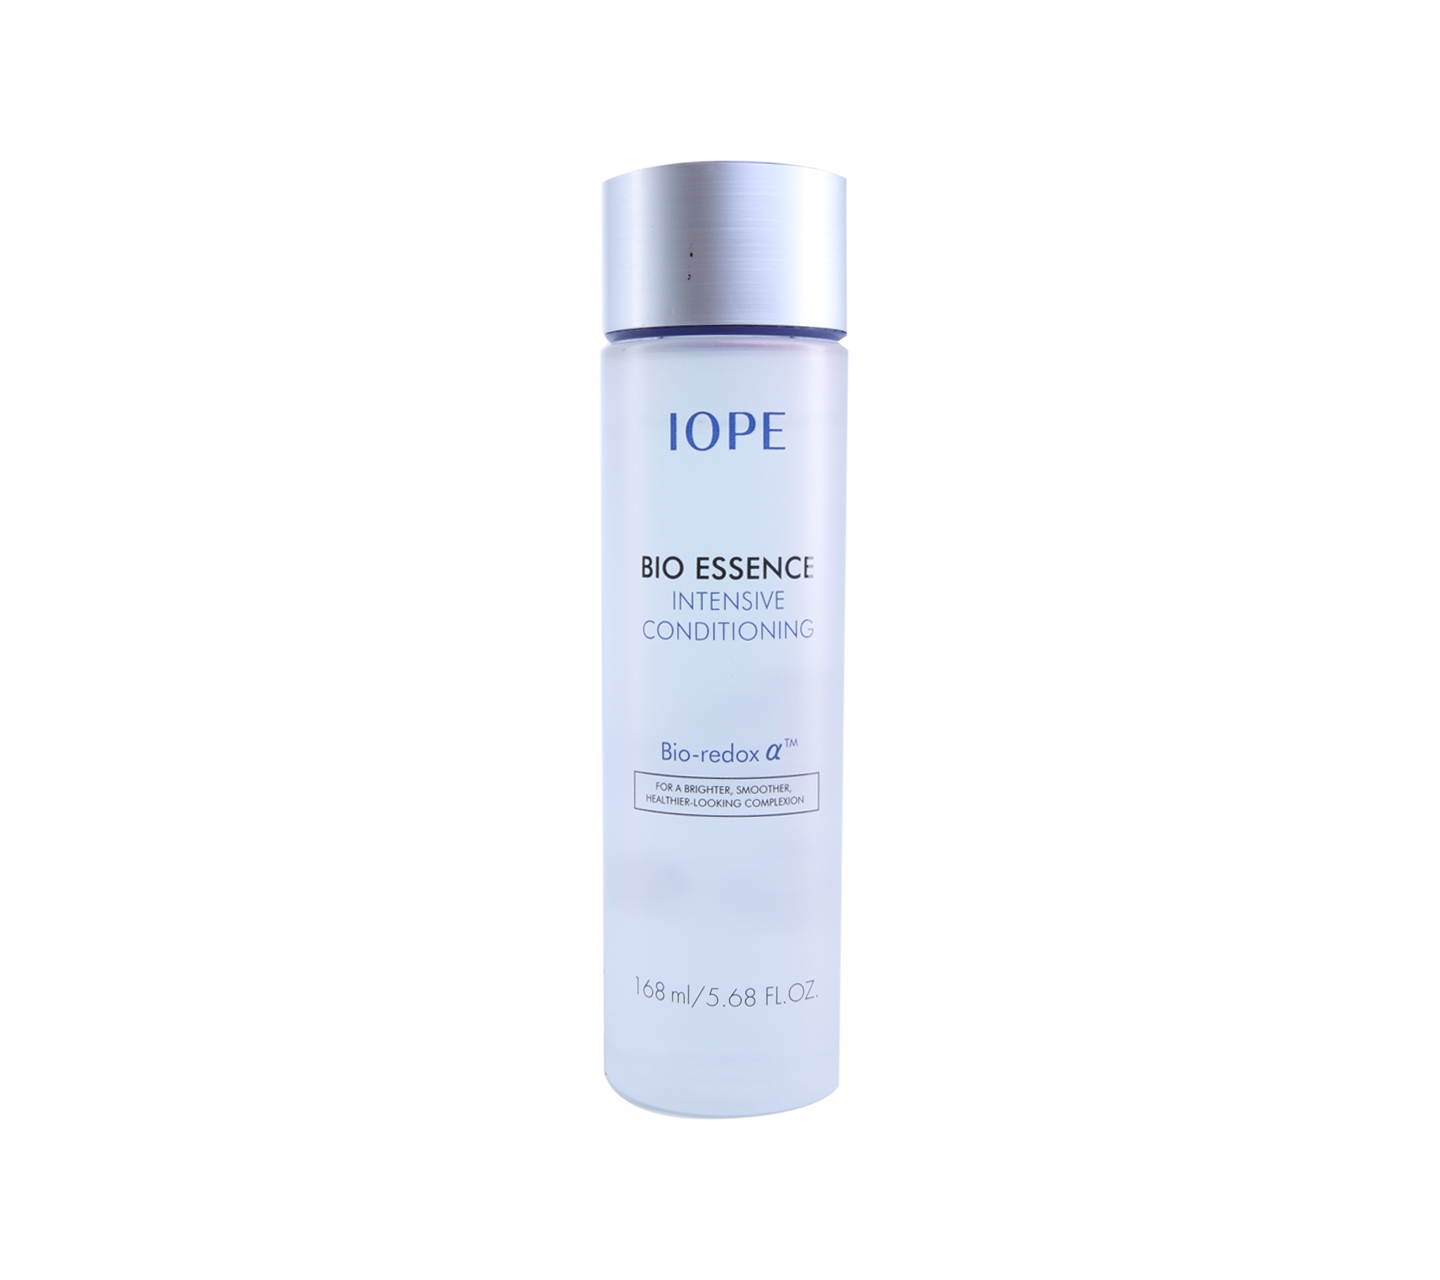 IOPE Bio Essence Intensive Conditioning Skin Care